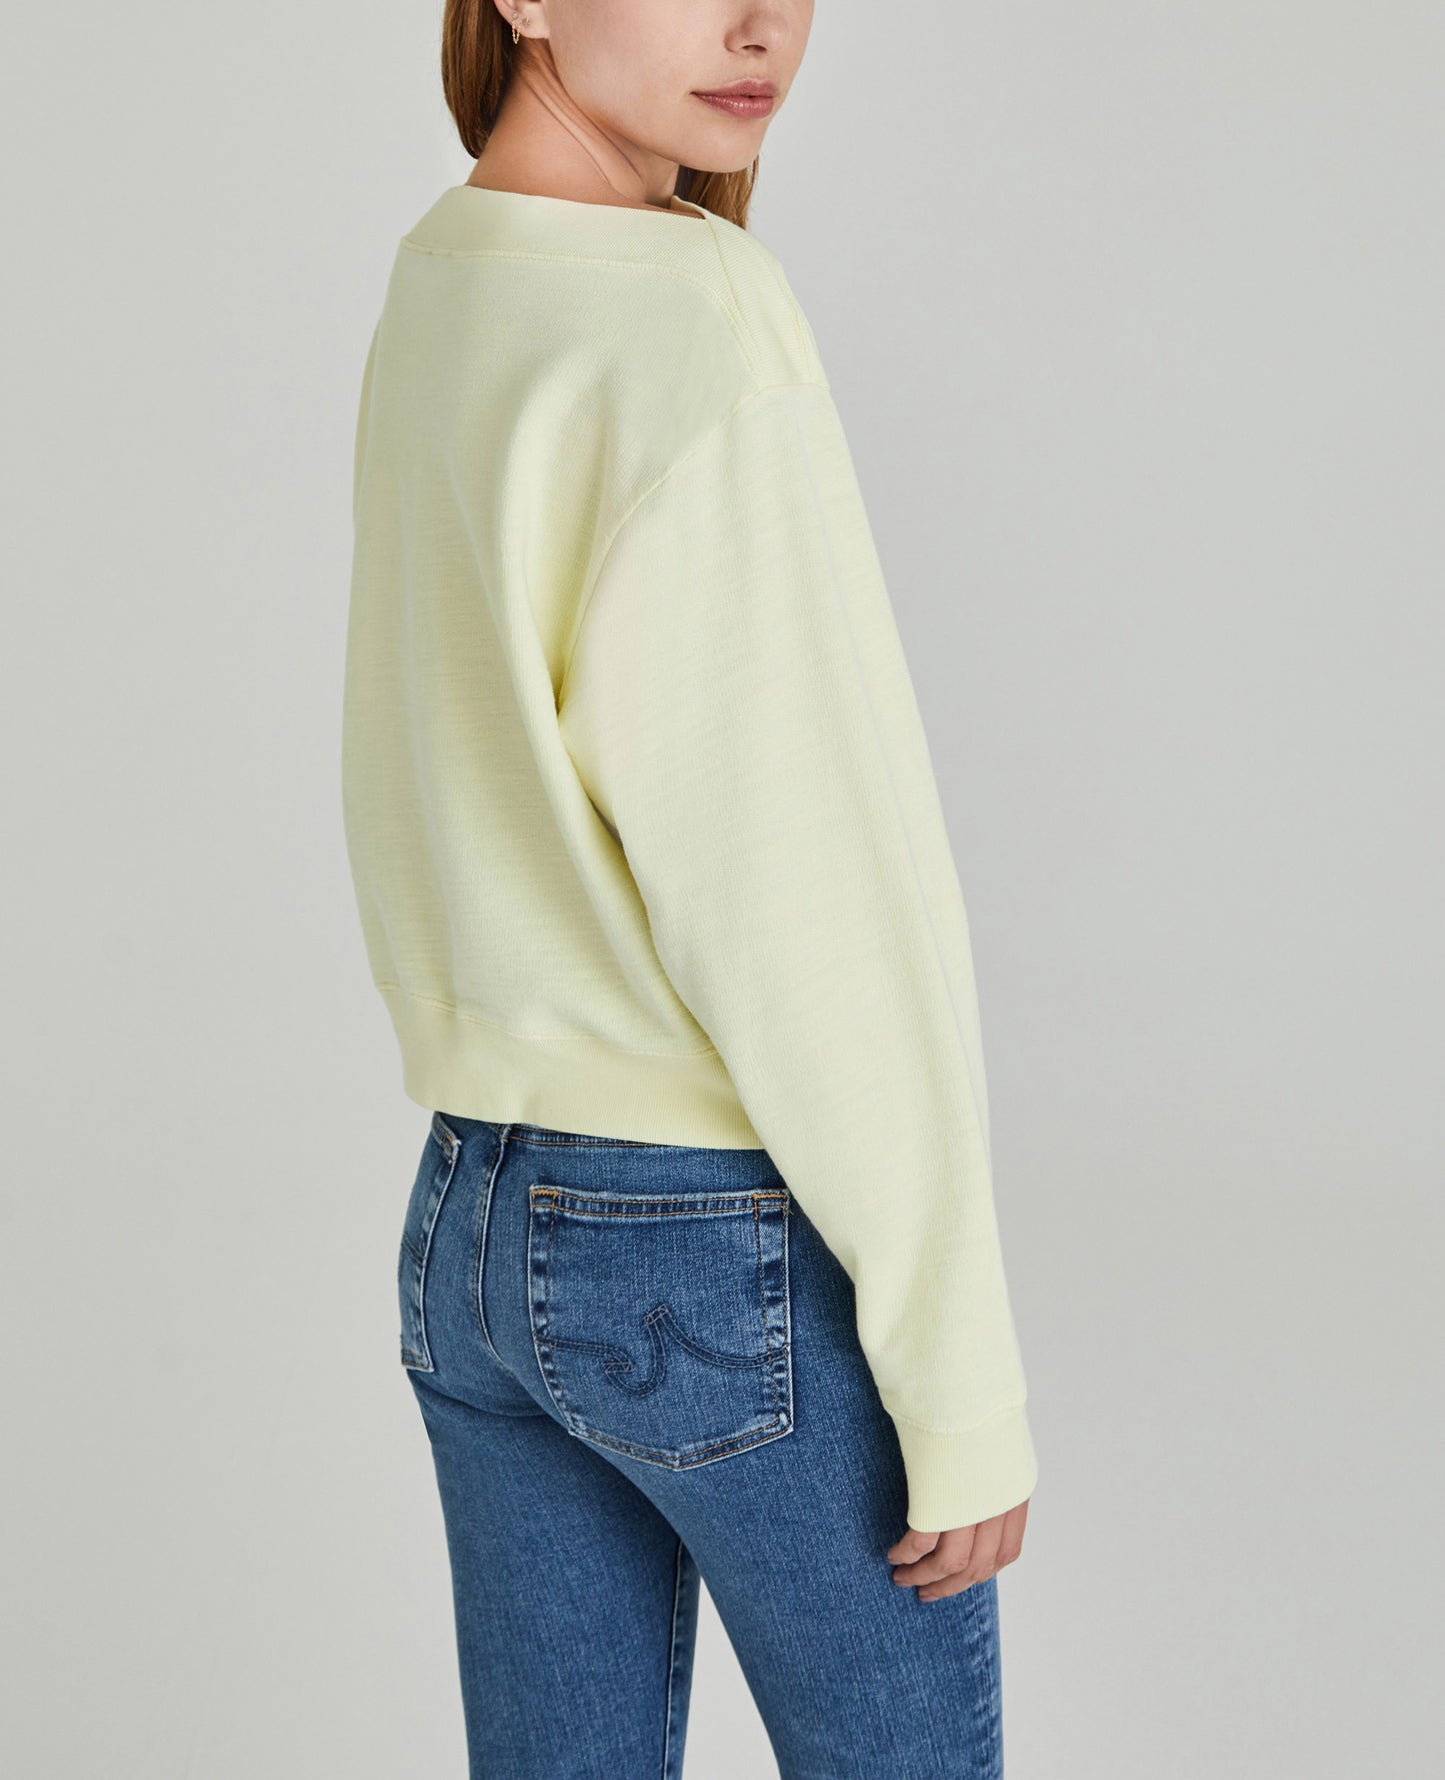 Cyra Sweatshirt Citrus Mist Snap Button Sweatshirt Women Tops Photo 6